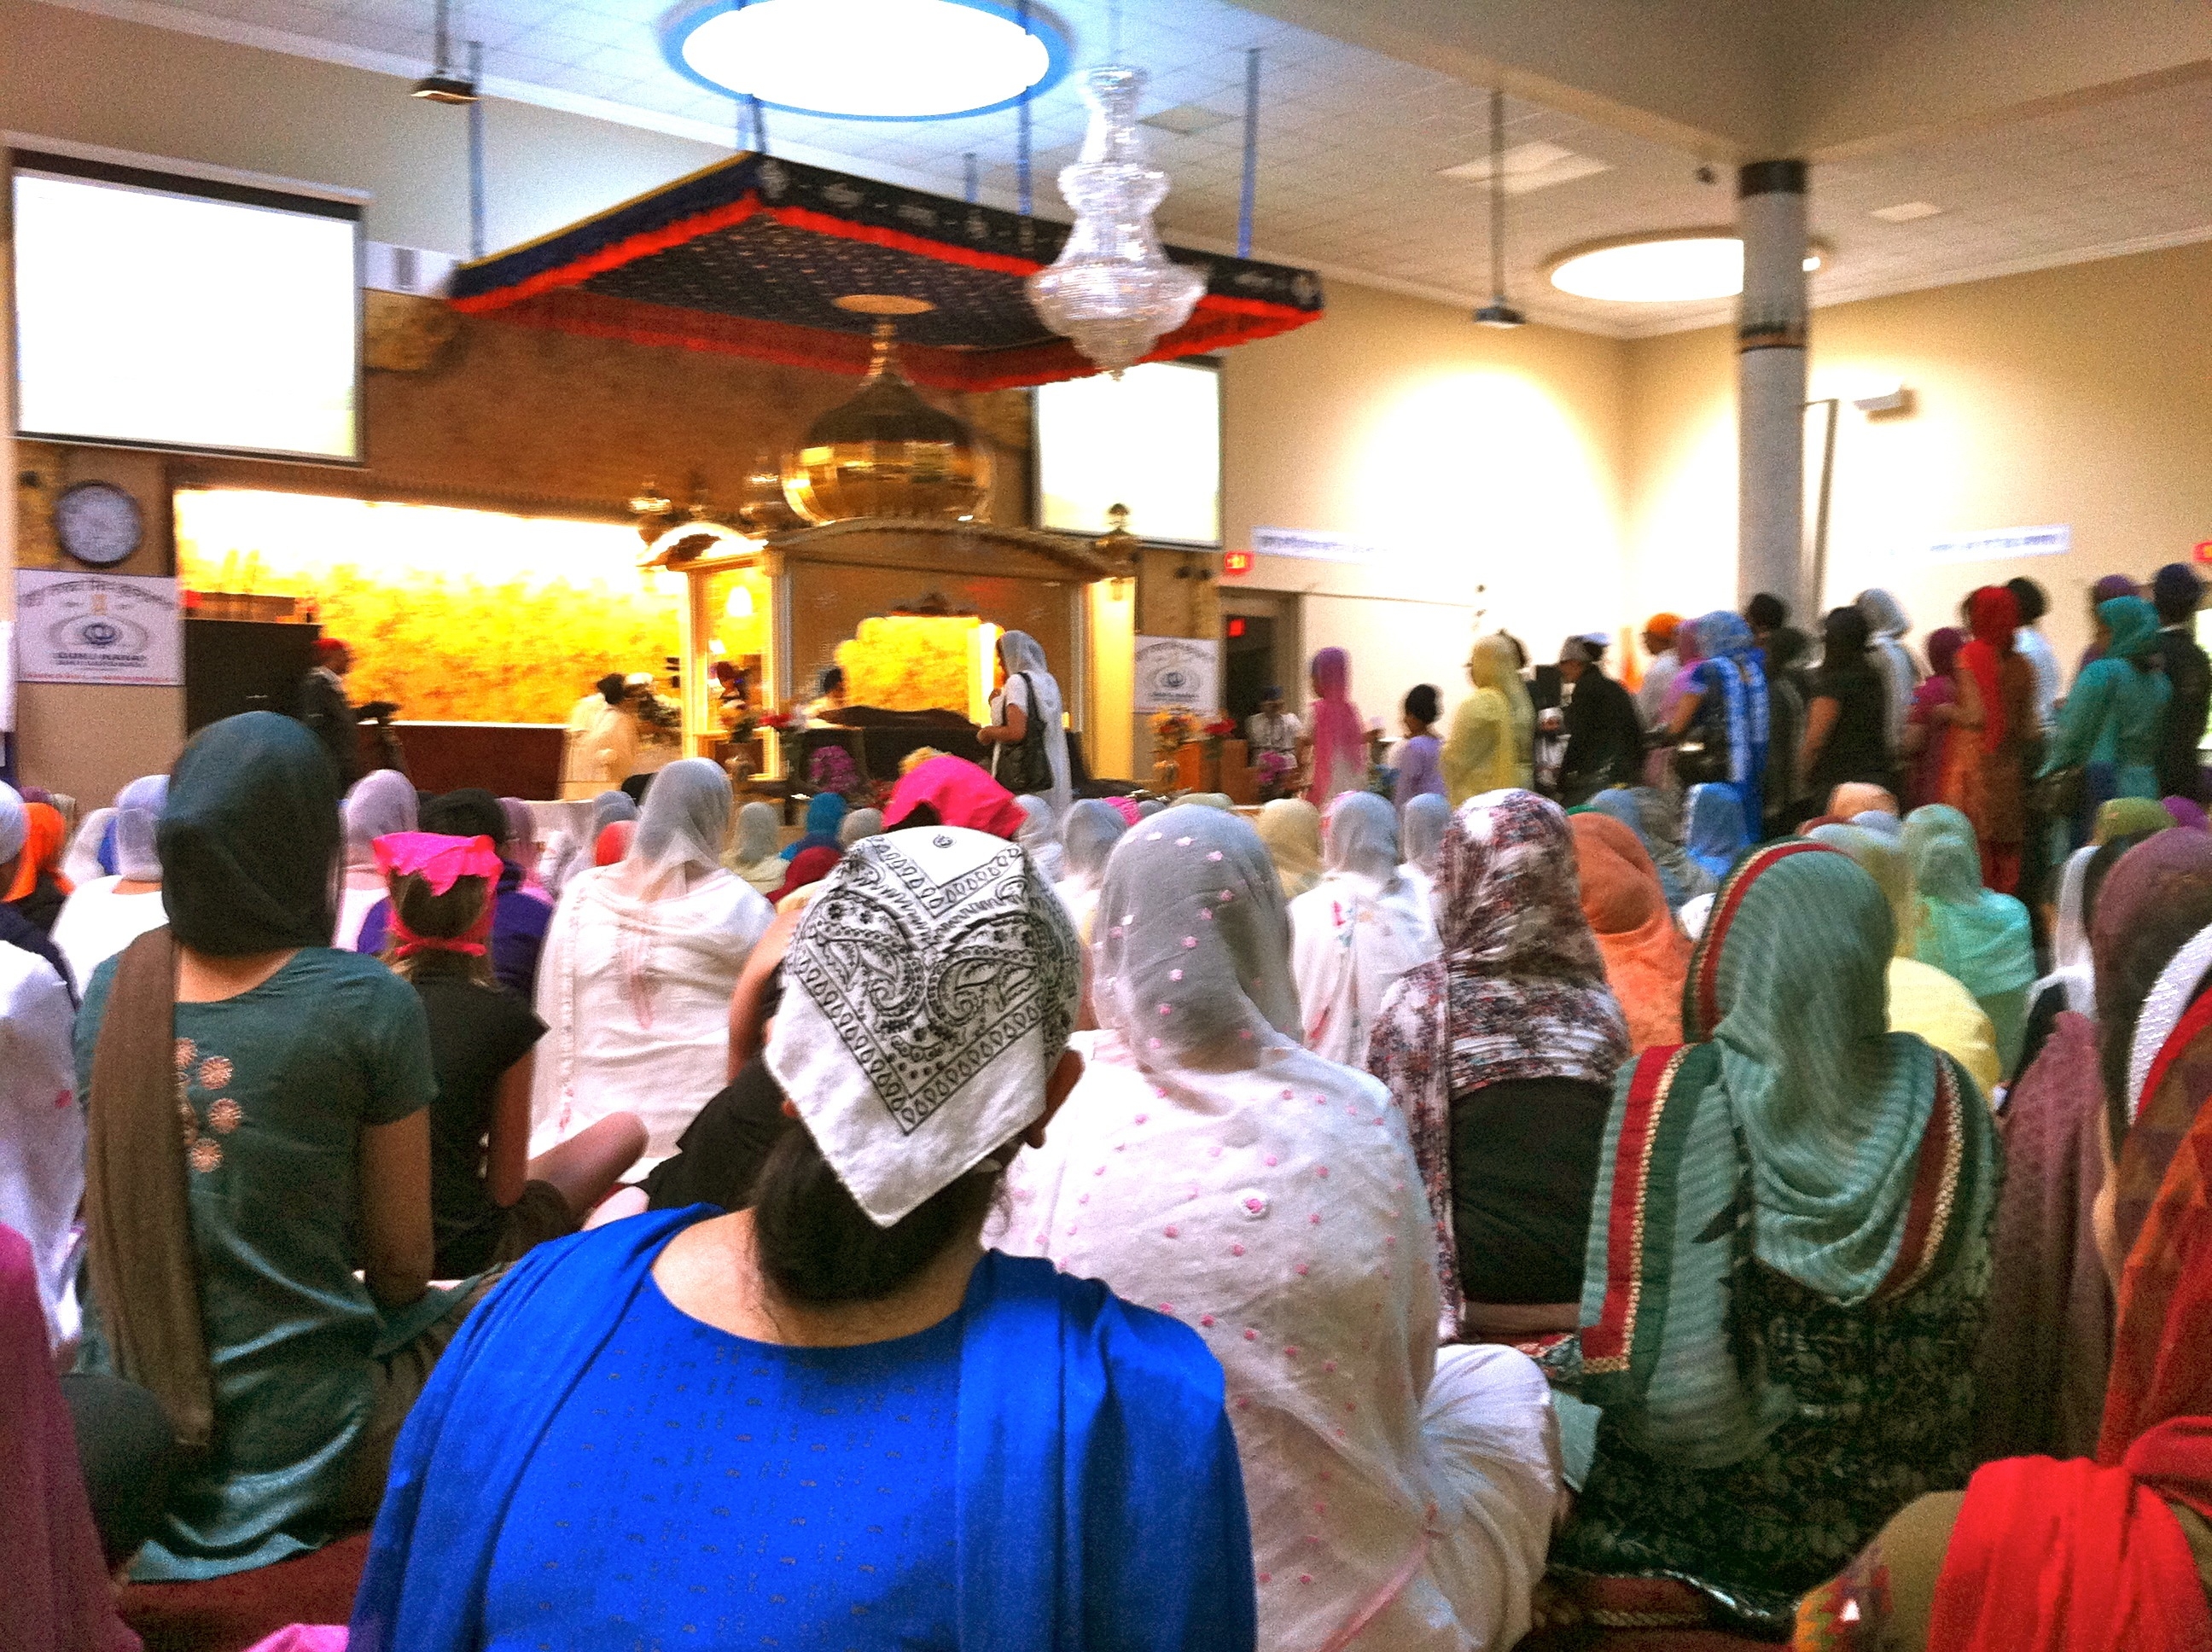 A prayer vigil was held at the Guru Nanak Sikh Temple in Surrey on August 7.